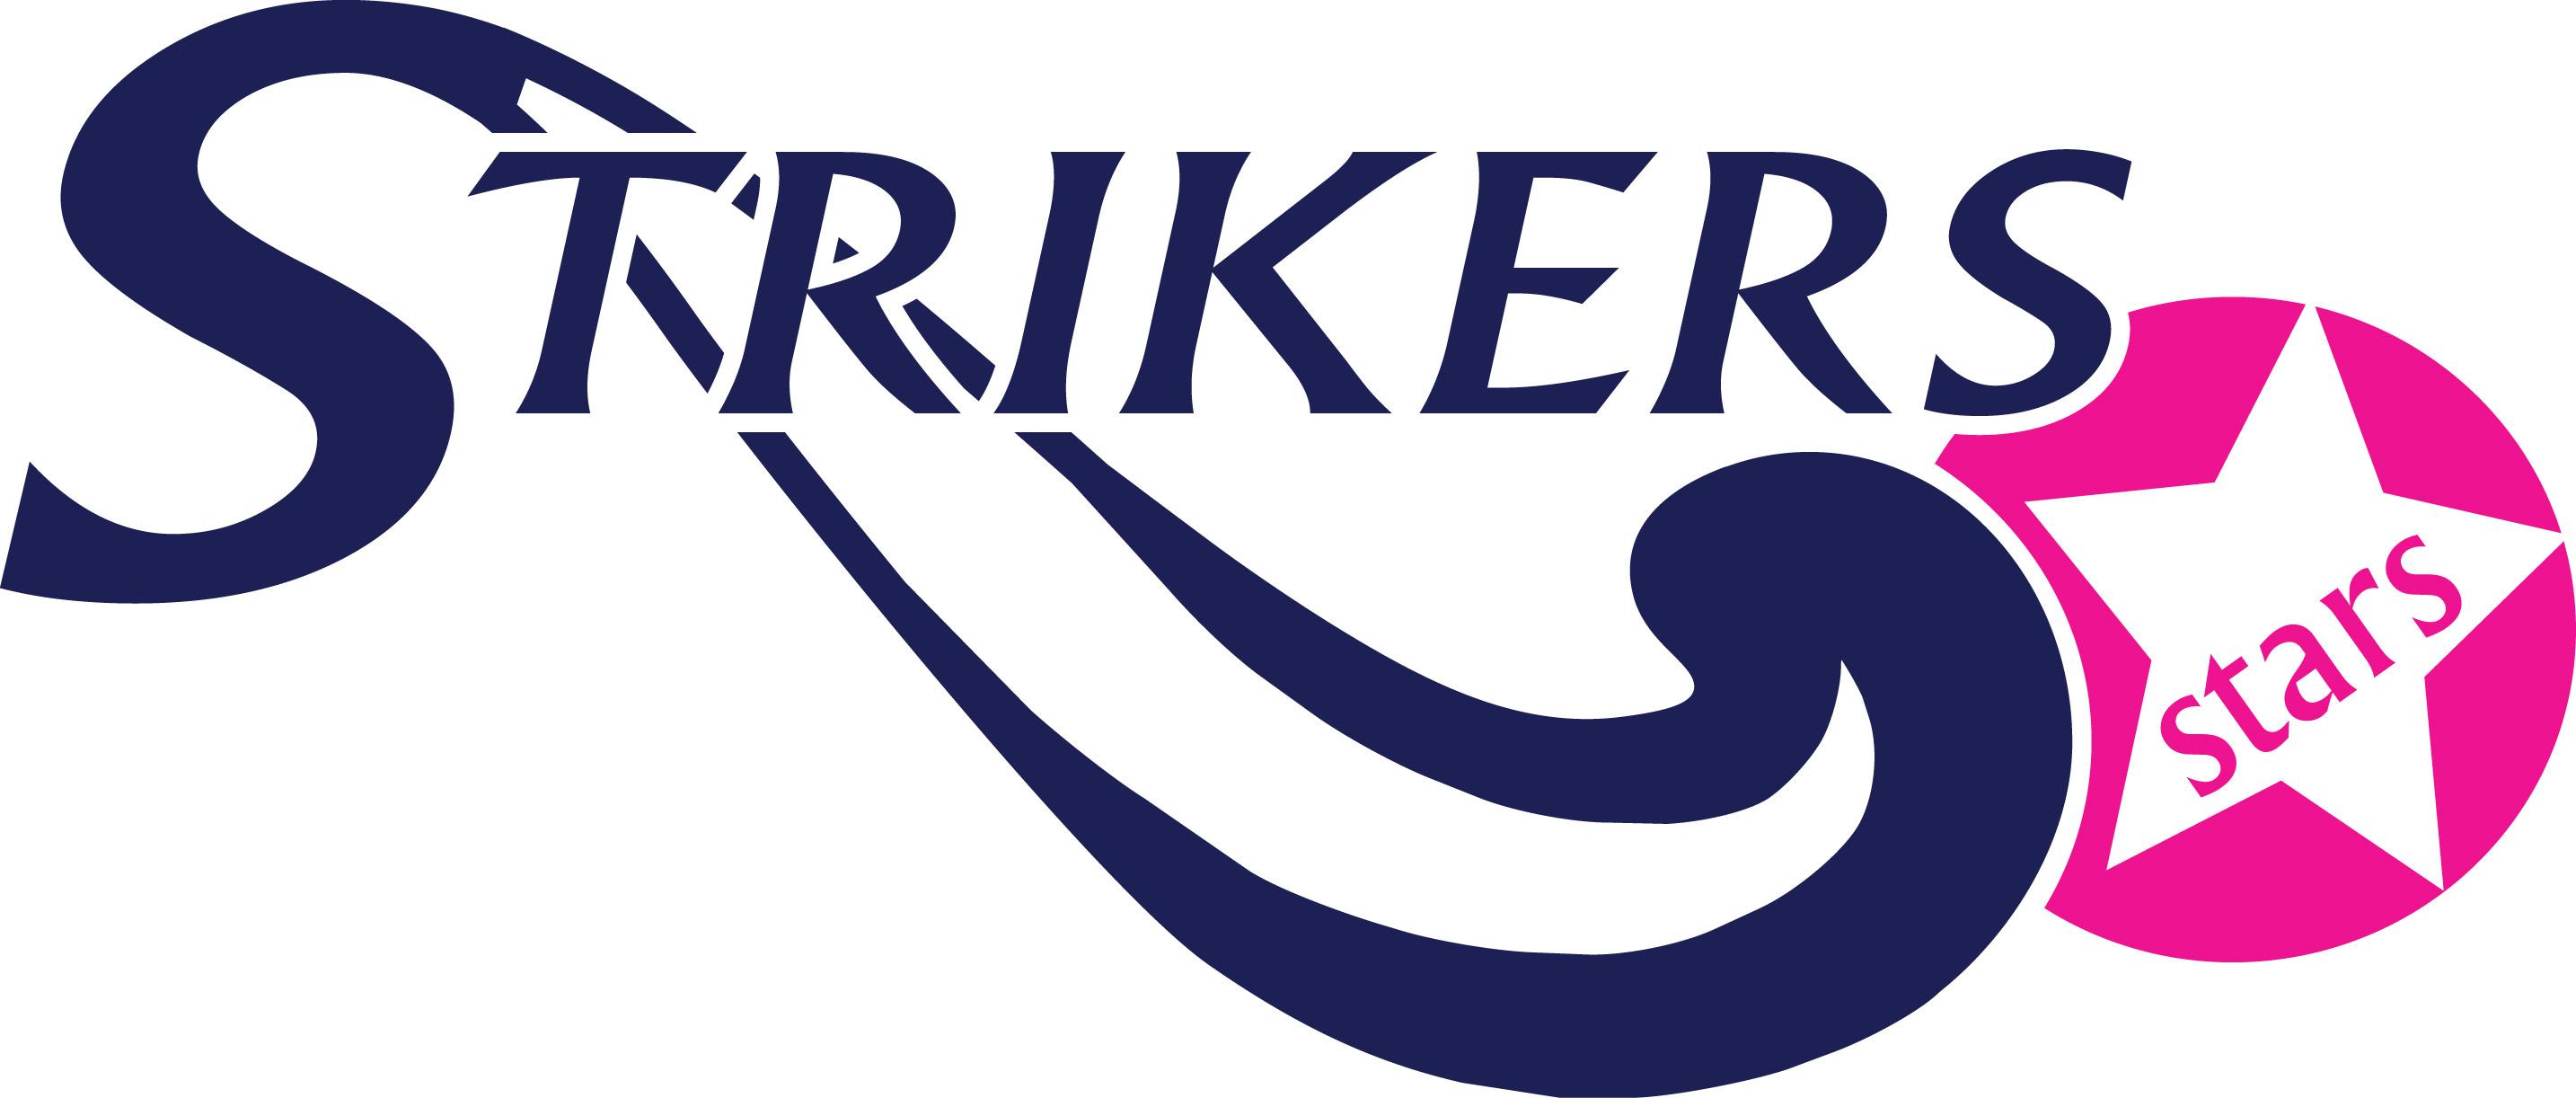 Strikers Logo - Strikers Logo